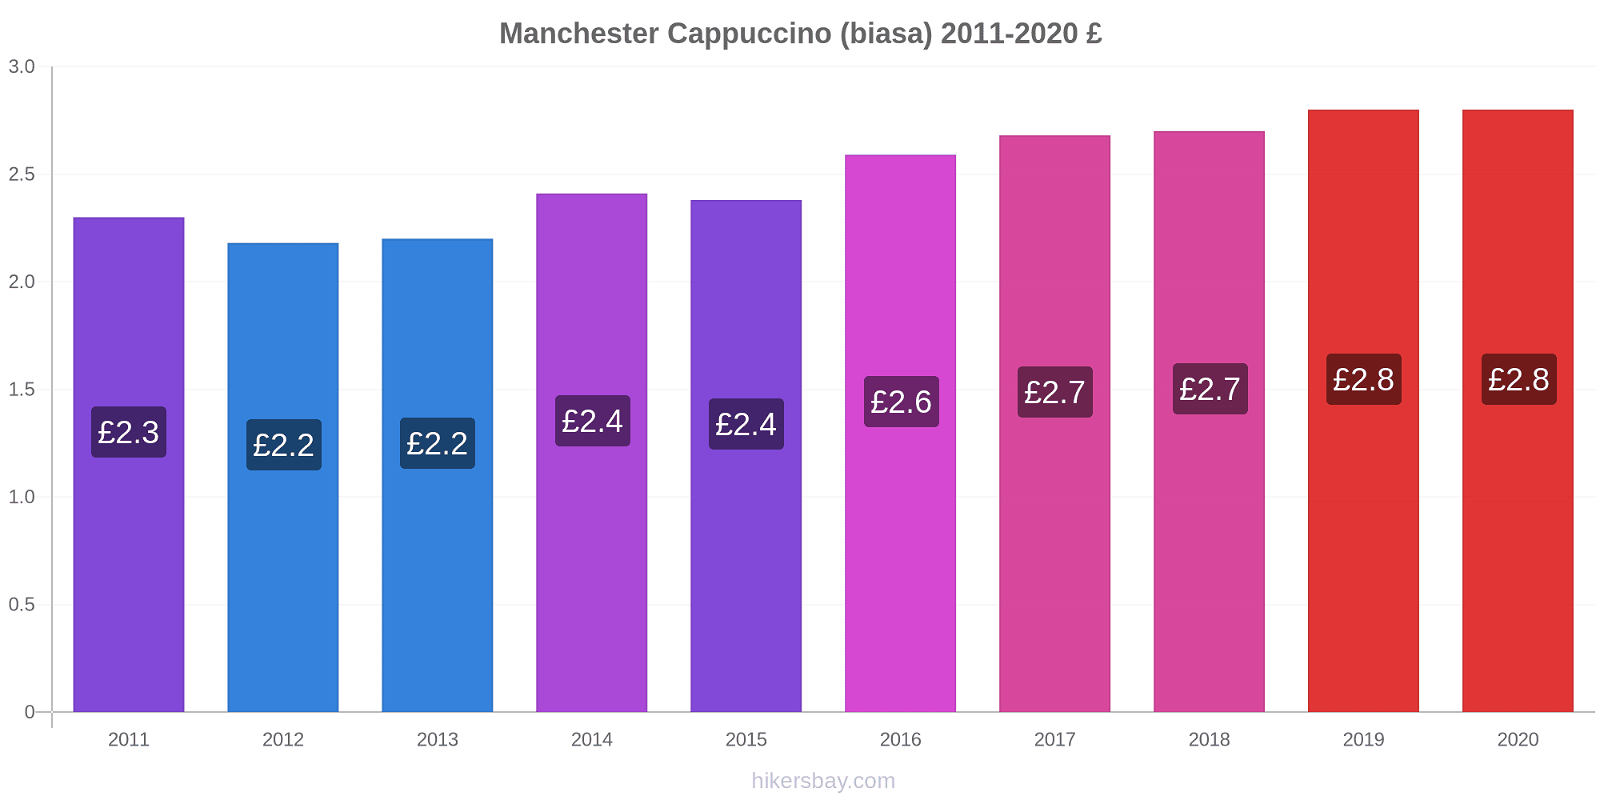 Manchester perubahan harga Cappuccino (biasa) hikersbay.com